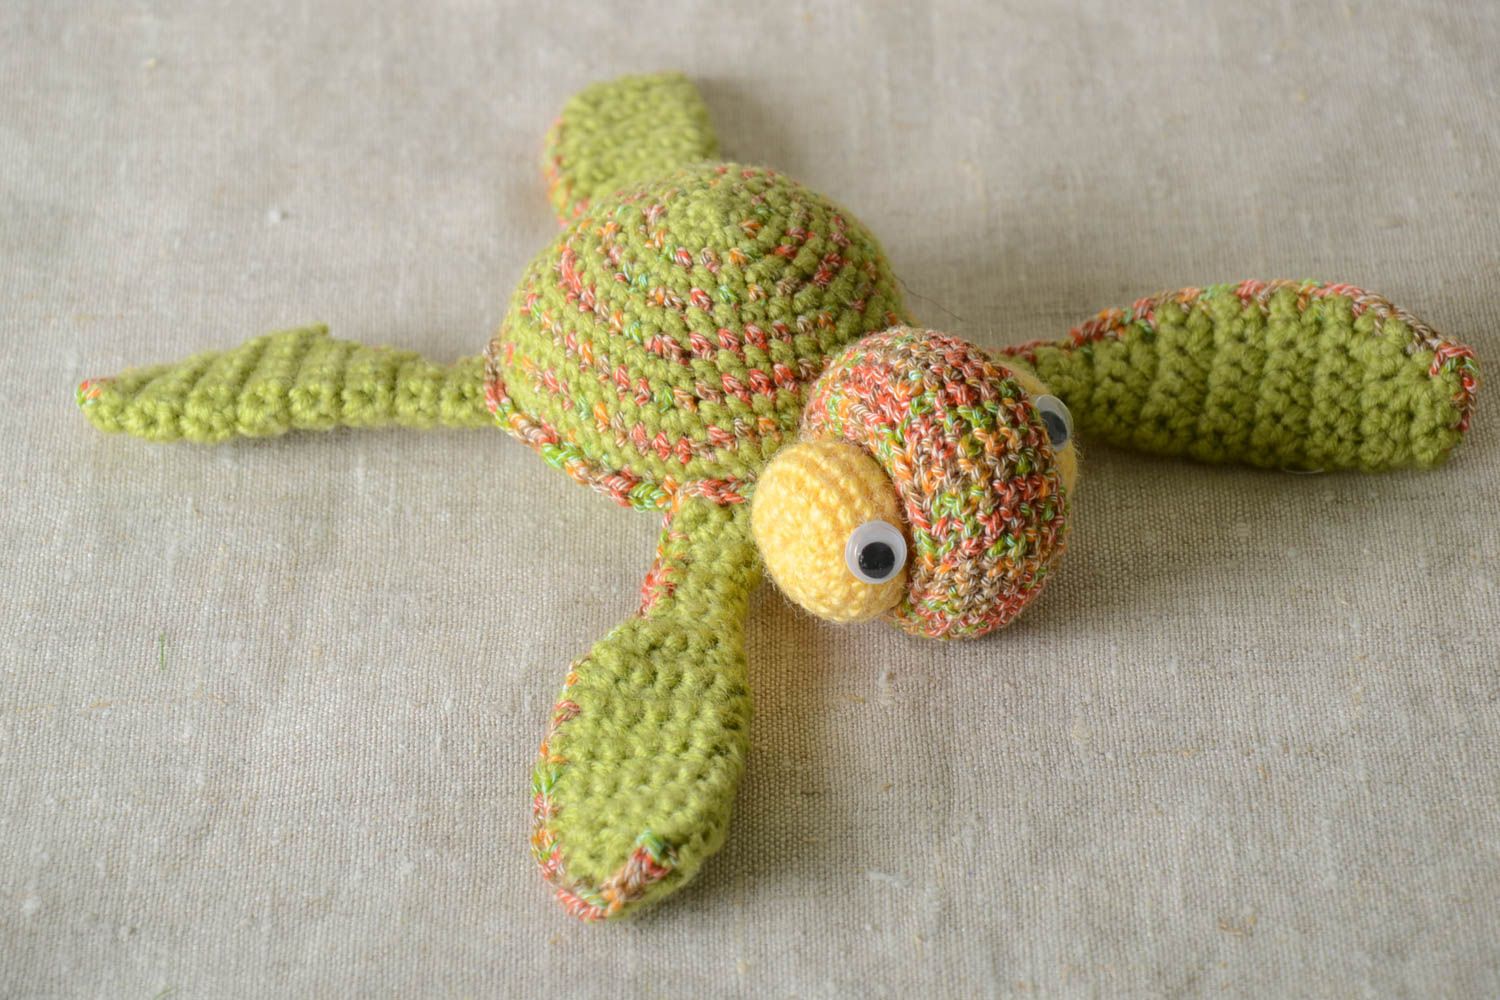 Unusual handmade crochet soft toy stuffed toy turtle room decor ideas photo 1